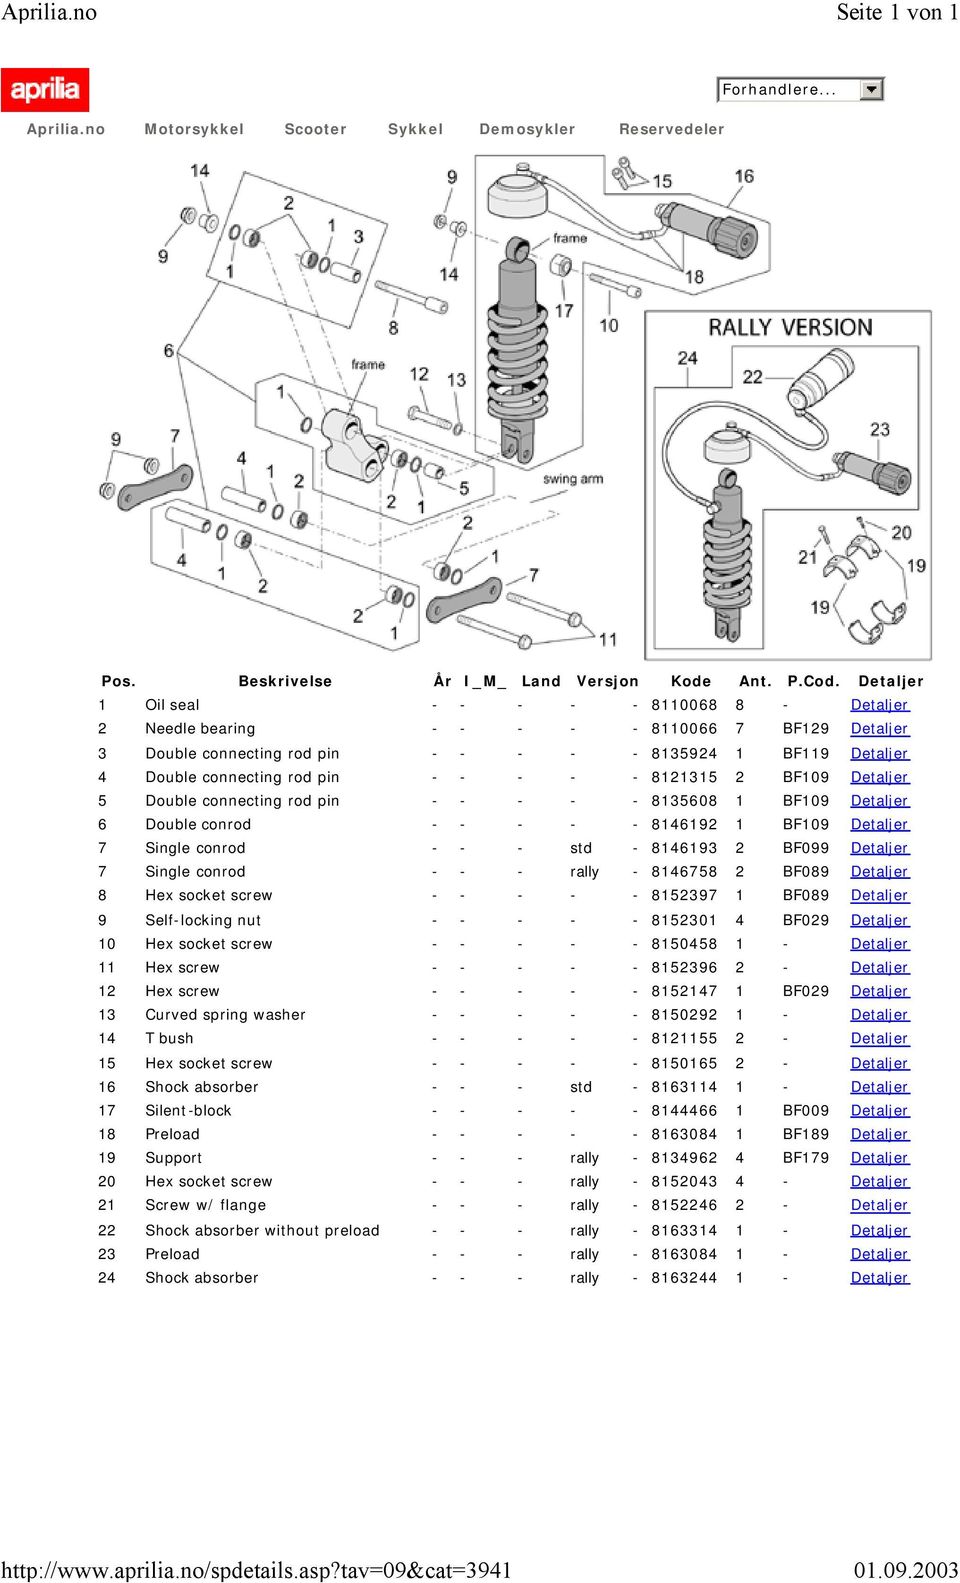 Single conrod - - - rally - 8146758 2 BF089 Detaljer 8 Hex socket screw - - - - - 8152397 1 BF089 Detaljer 9 Self-locking nut - - - - - 8152301 4 BF029 Detaljer 10 Hex socket screw - - - - - 8150458